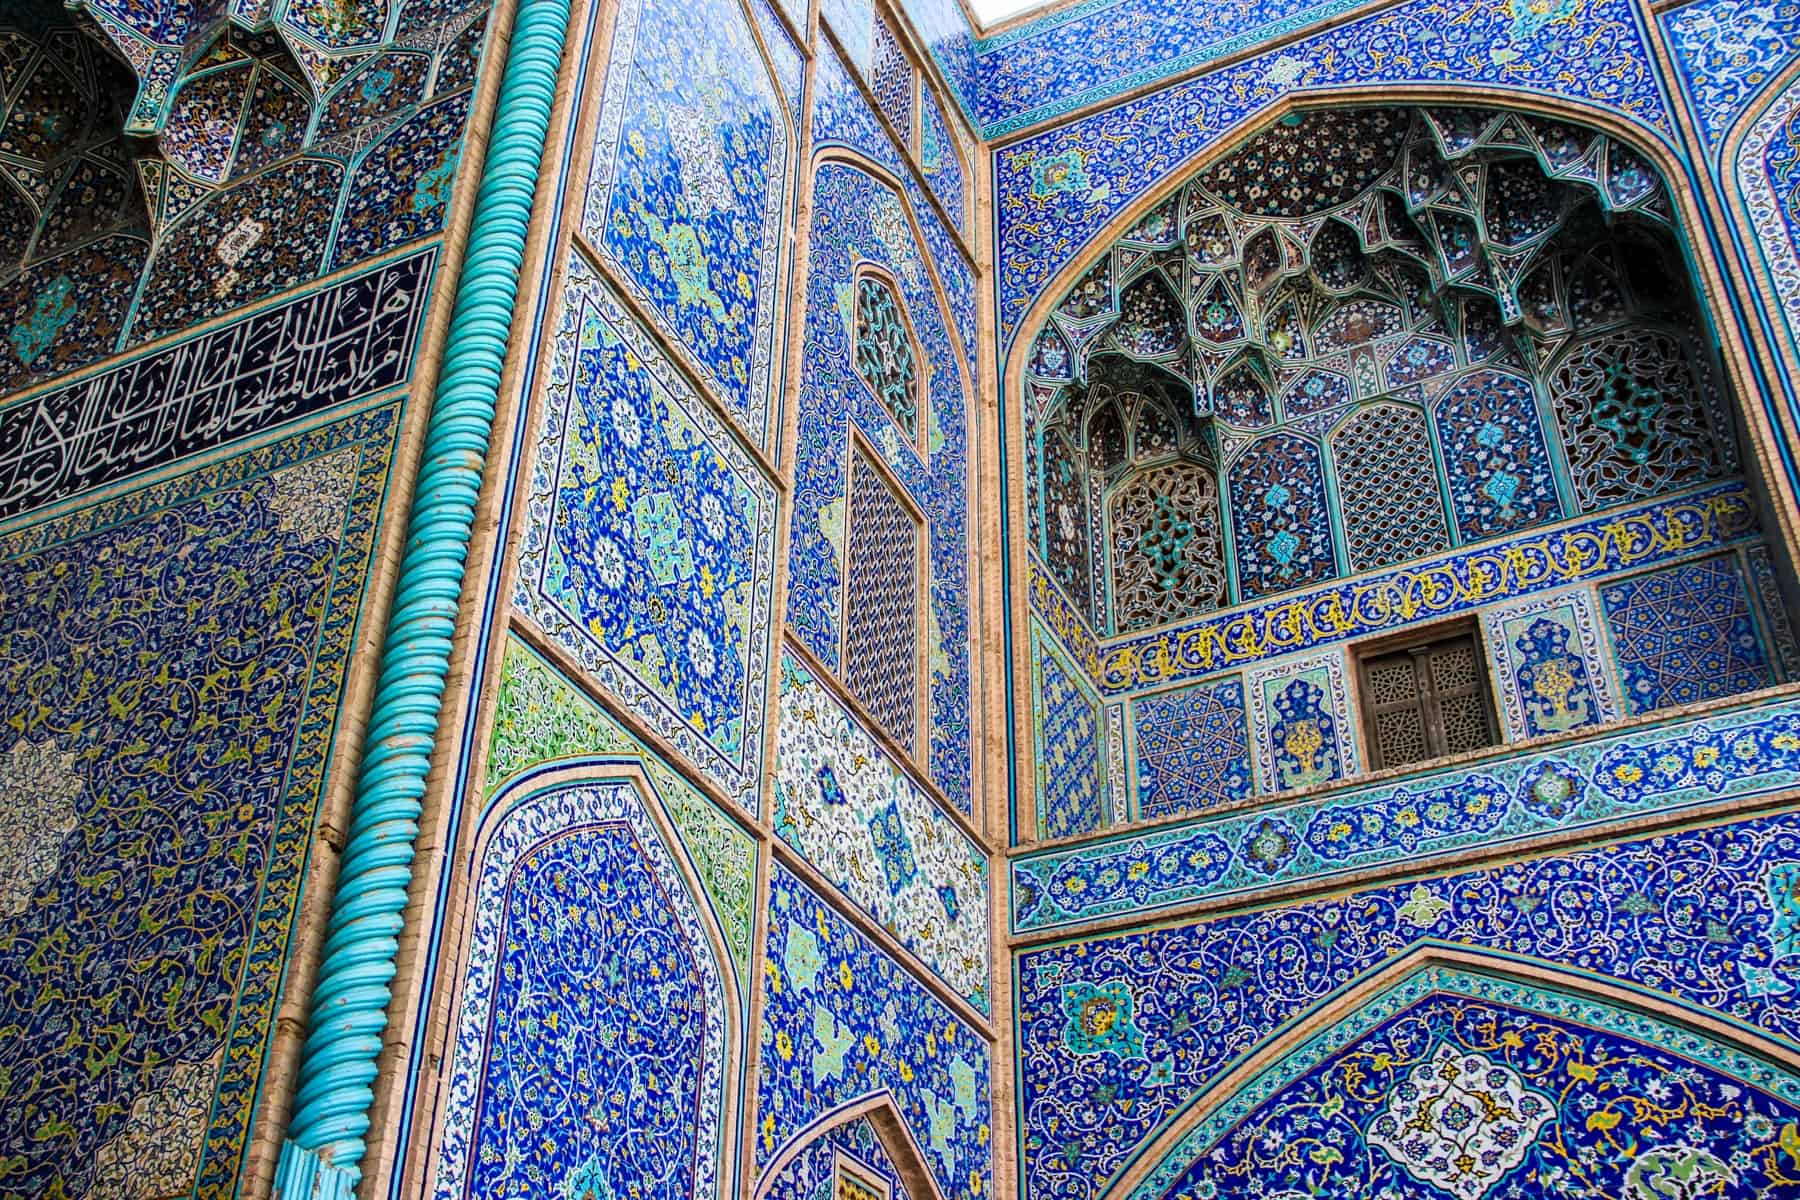 travel iran blog